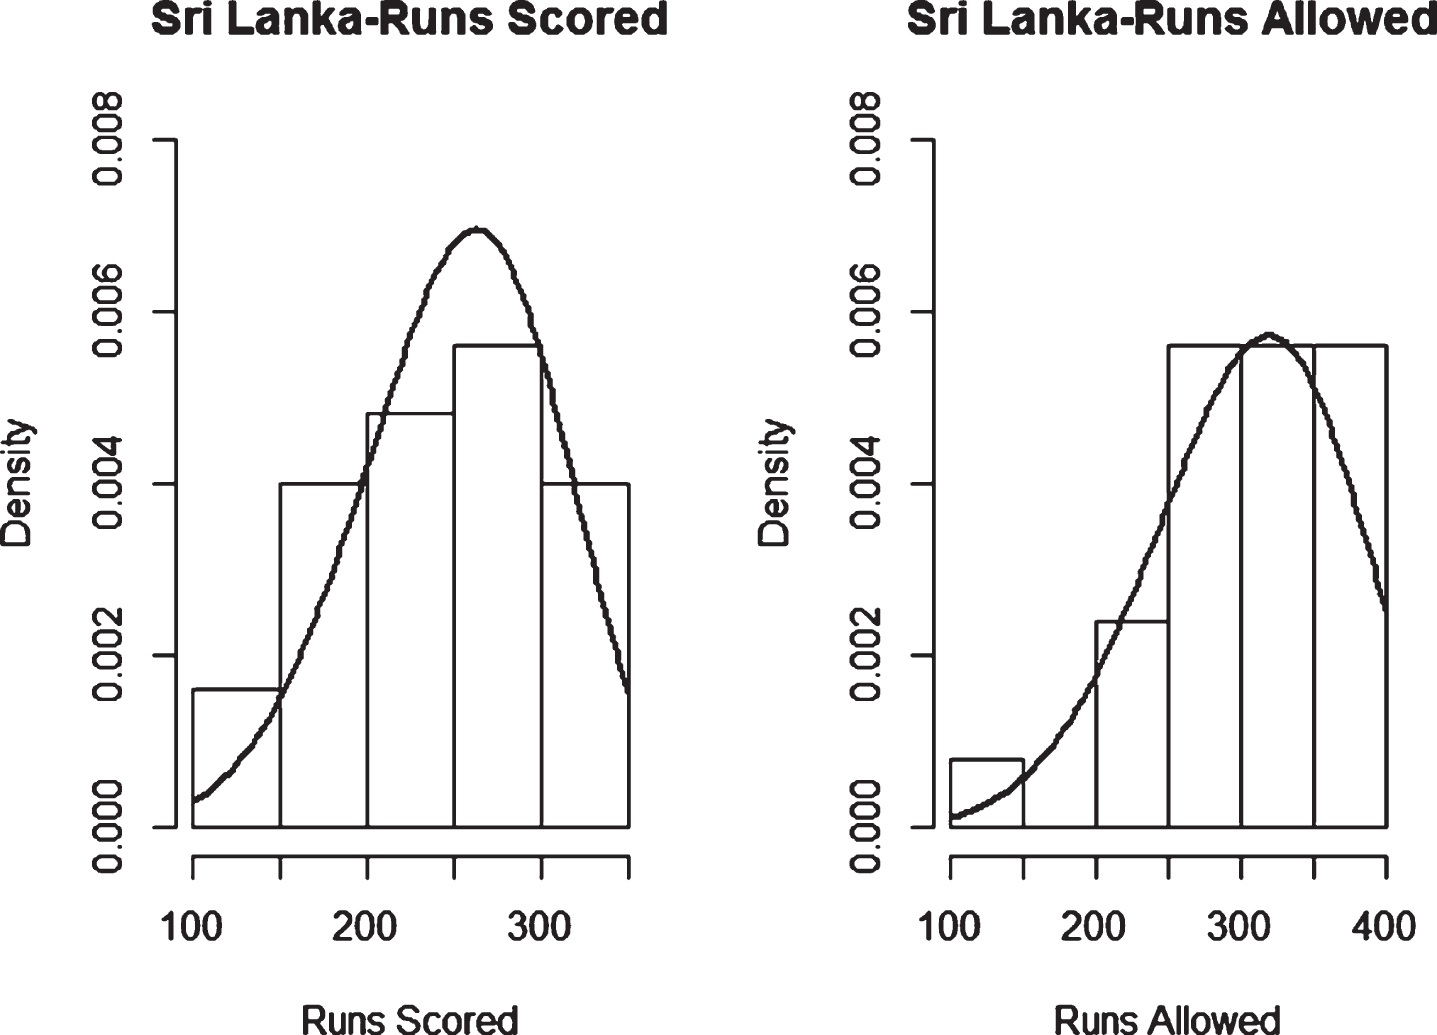 Weibull Distribution Fit for Runs Scored and Runs Allowed for Sri Lanka using Least Squares Method (ODI).